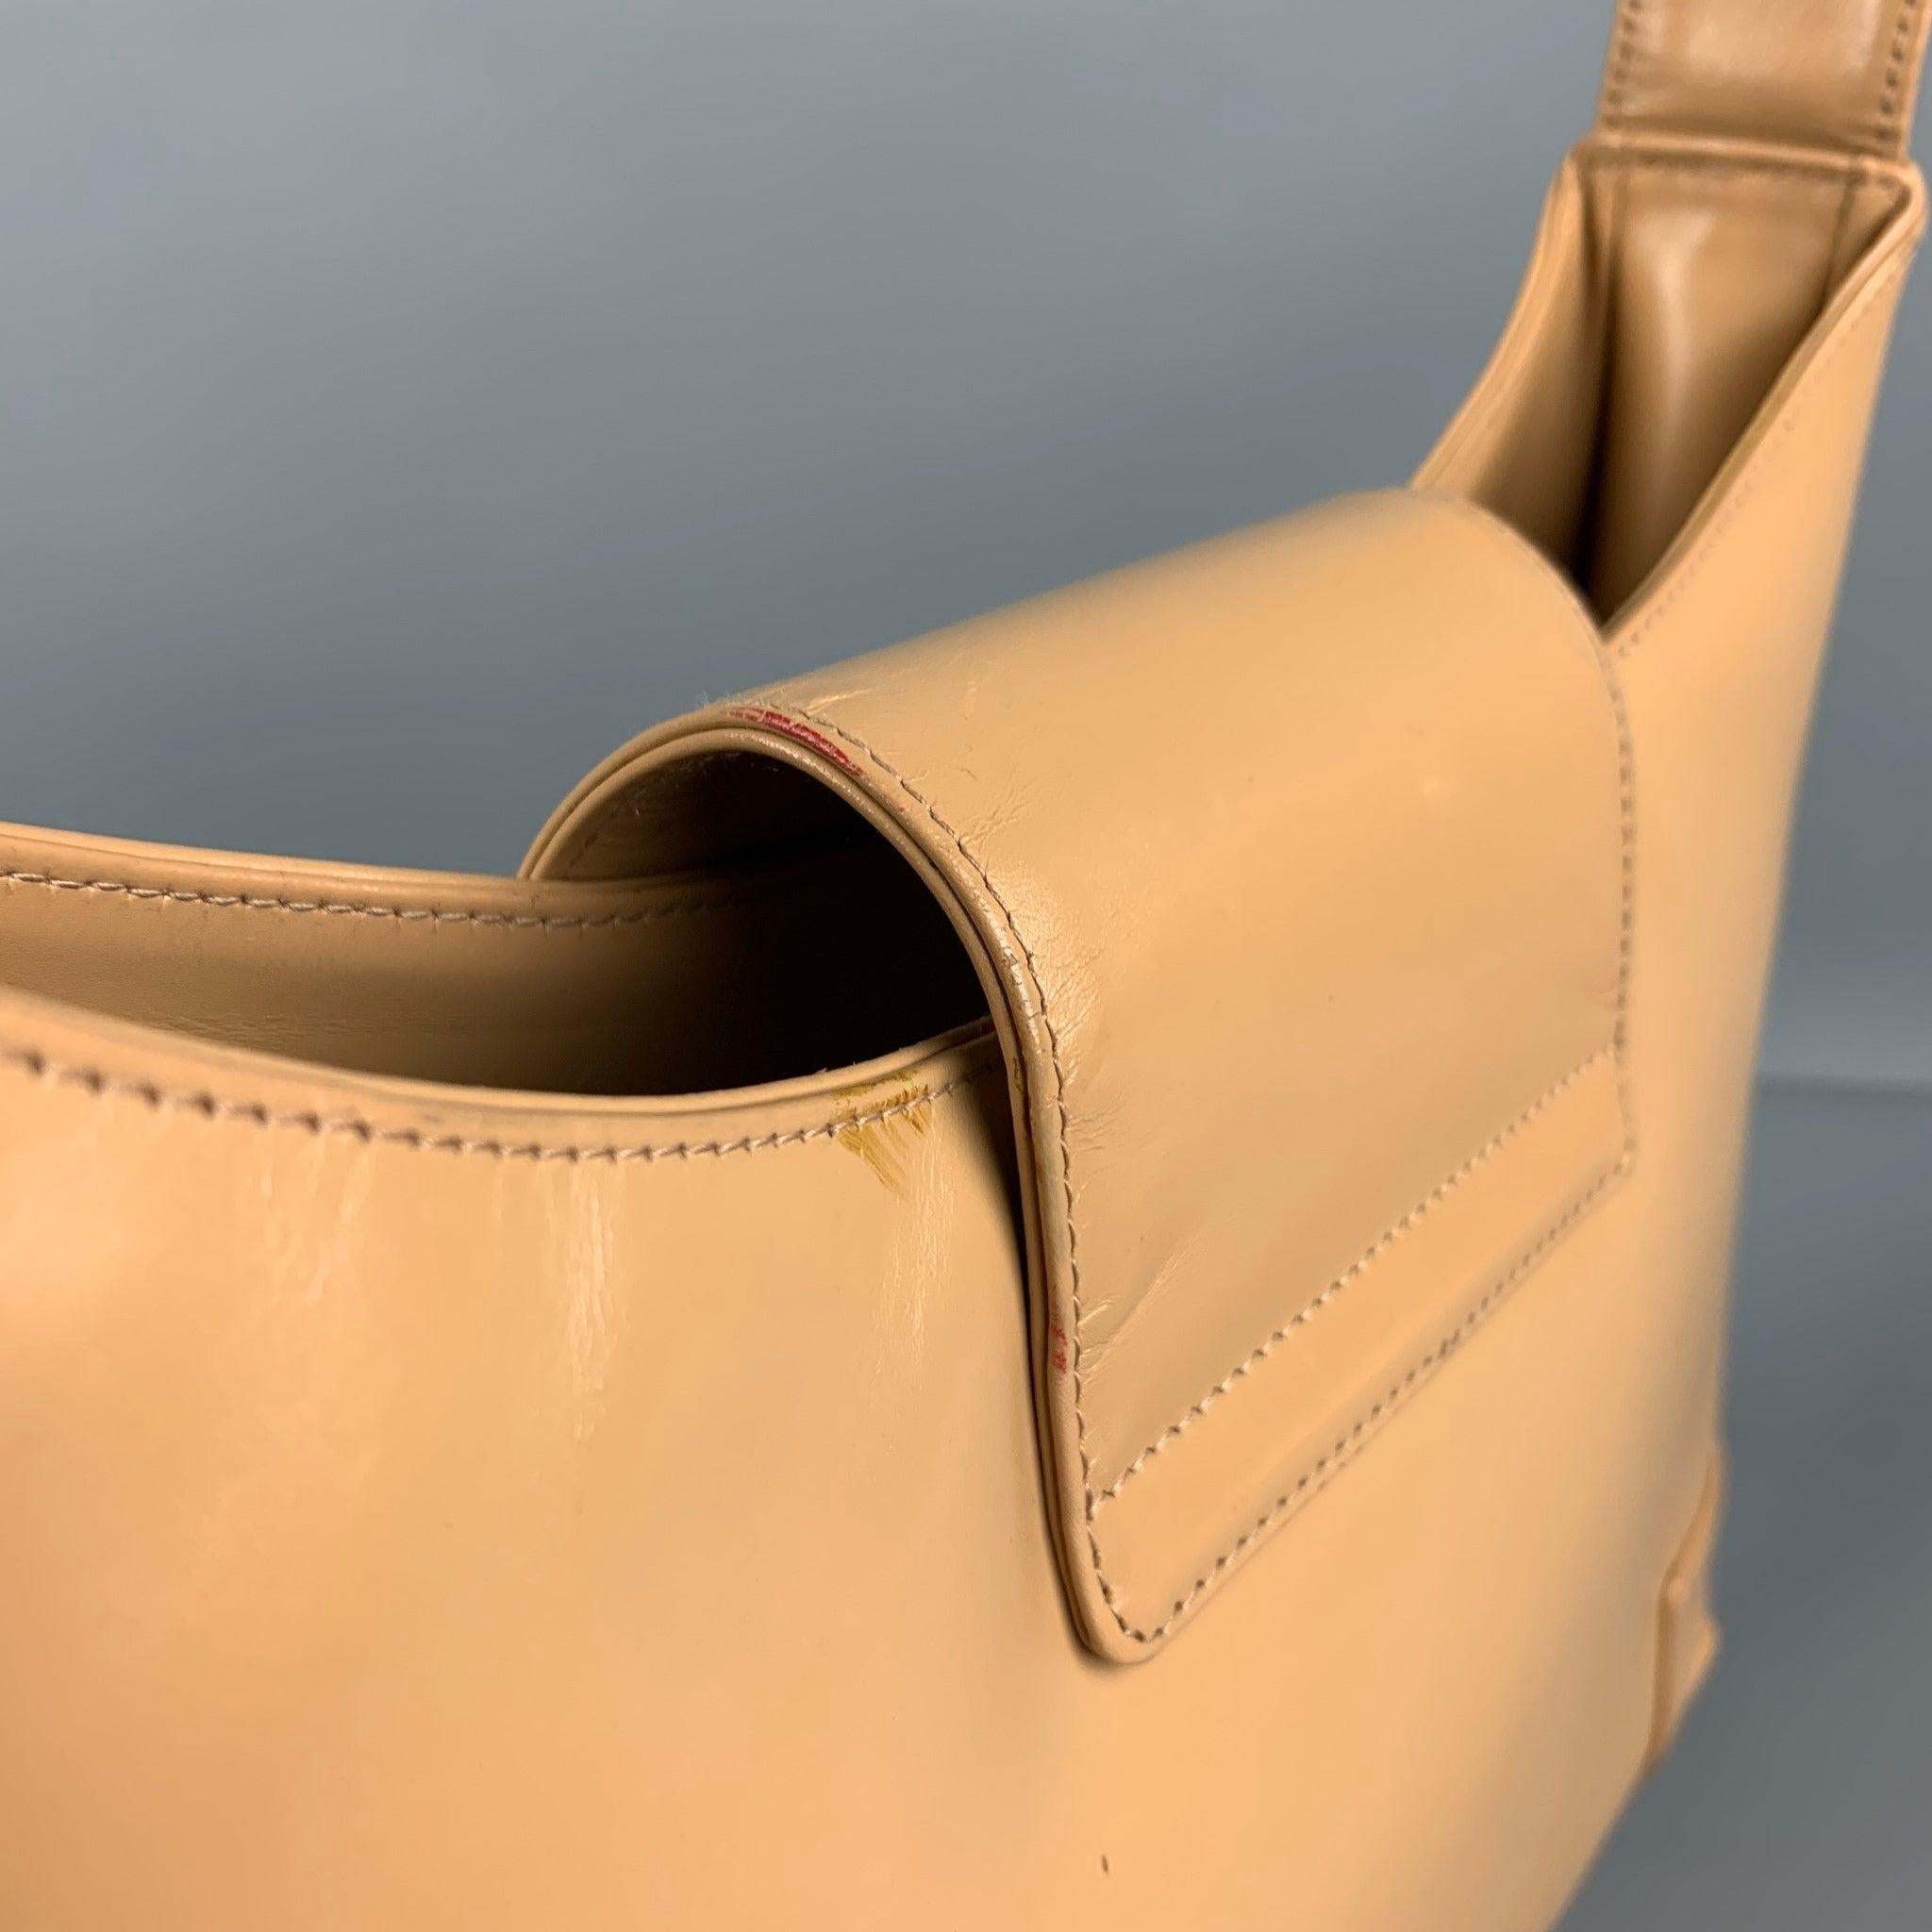 LAMBERTSON TRUEX Beige Leather Shoulder Bag Handbag For Sale 1